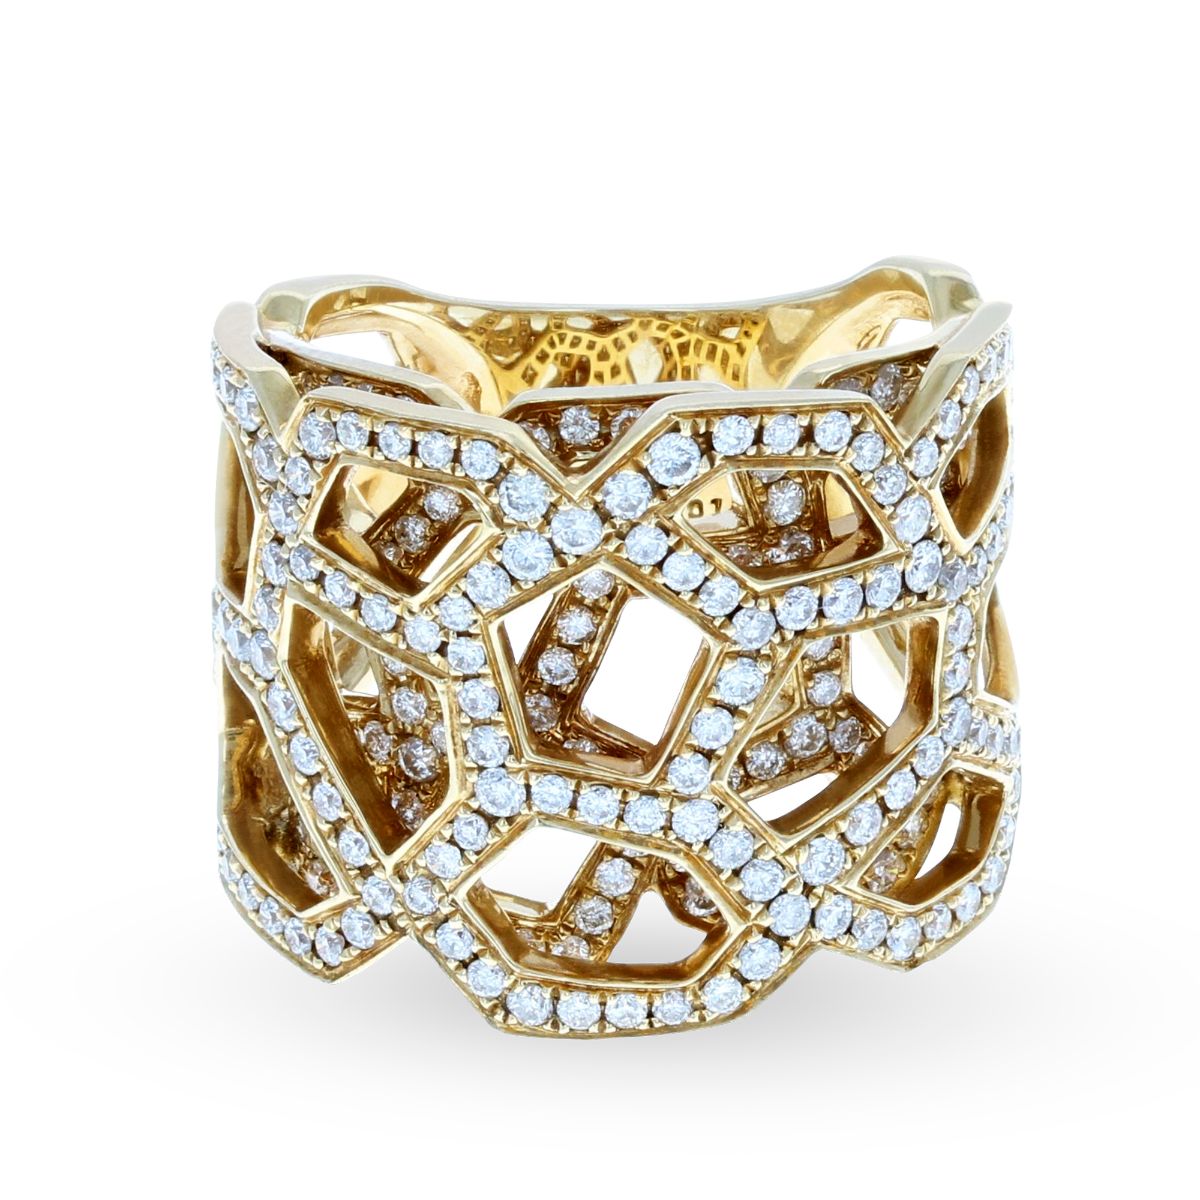 Fancy Yellow Gold Diamond Ring 14KT, 1.57 Carats